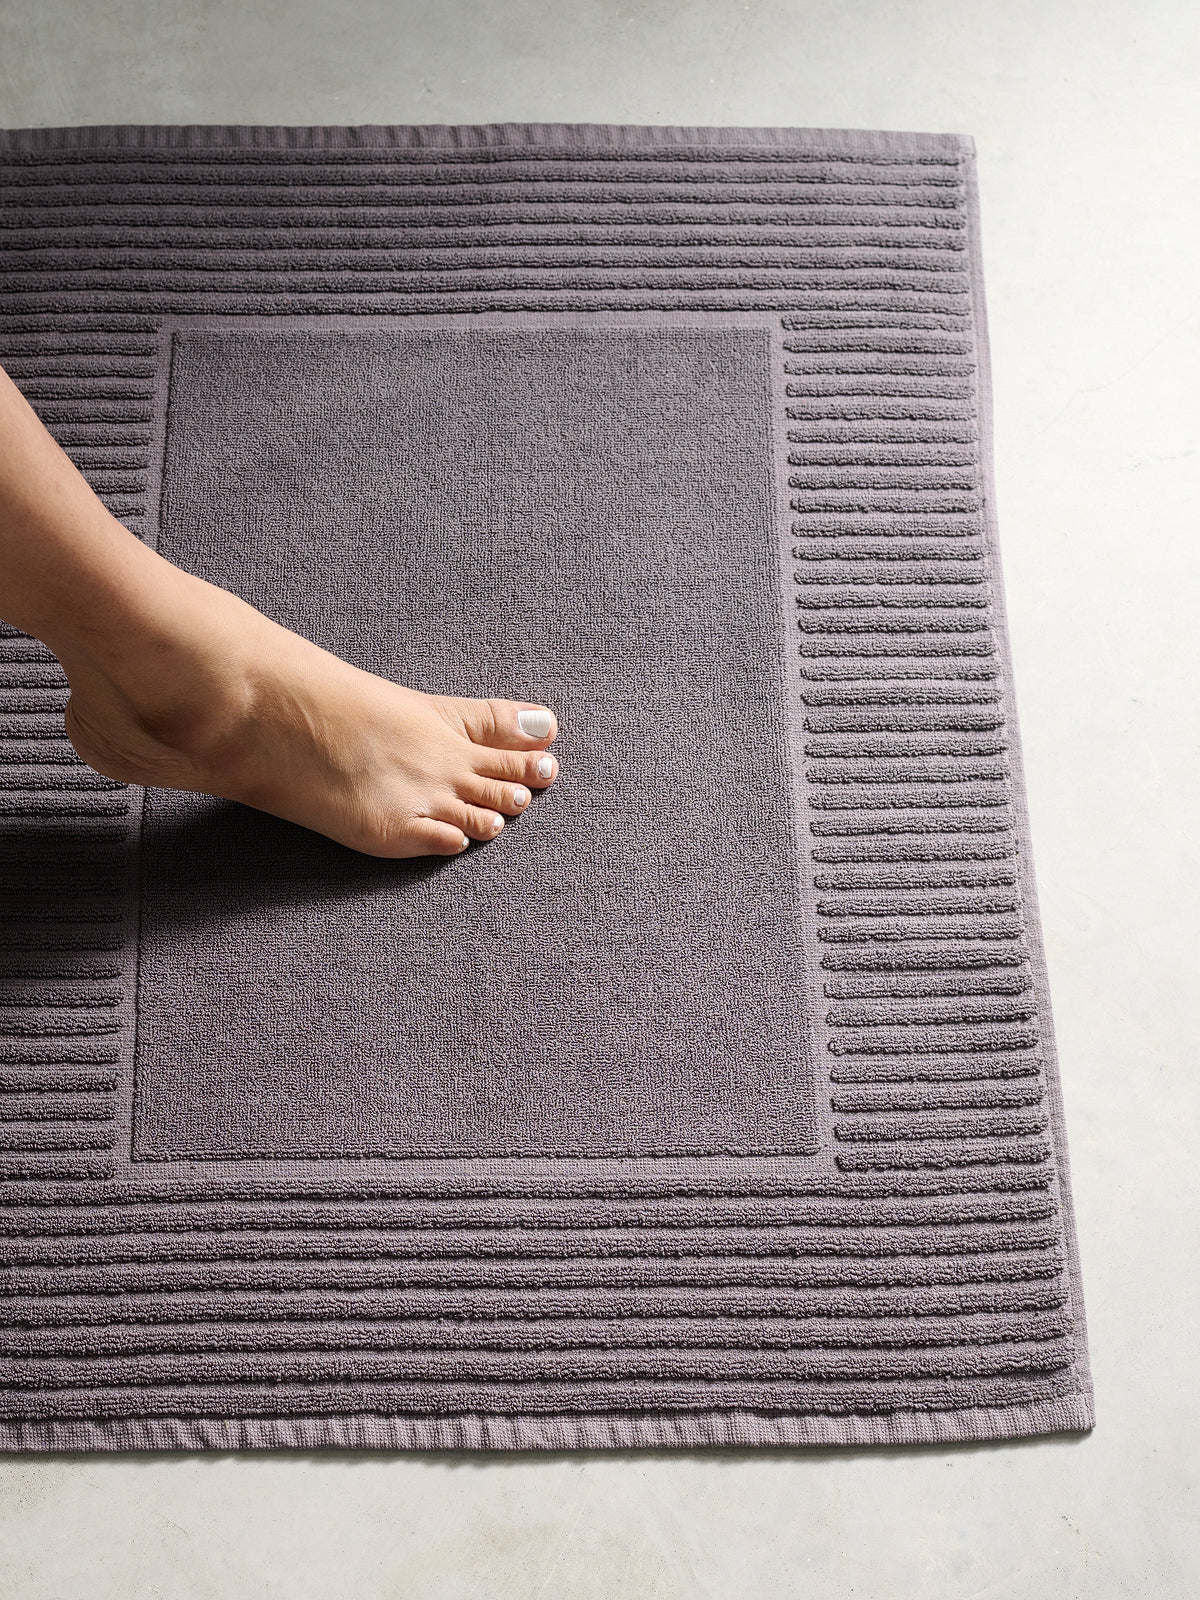 ALSTERN Bath mat, dark grey, 40x60 cm - IKEA